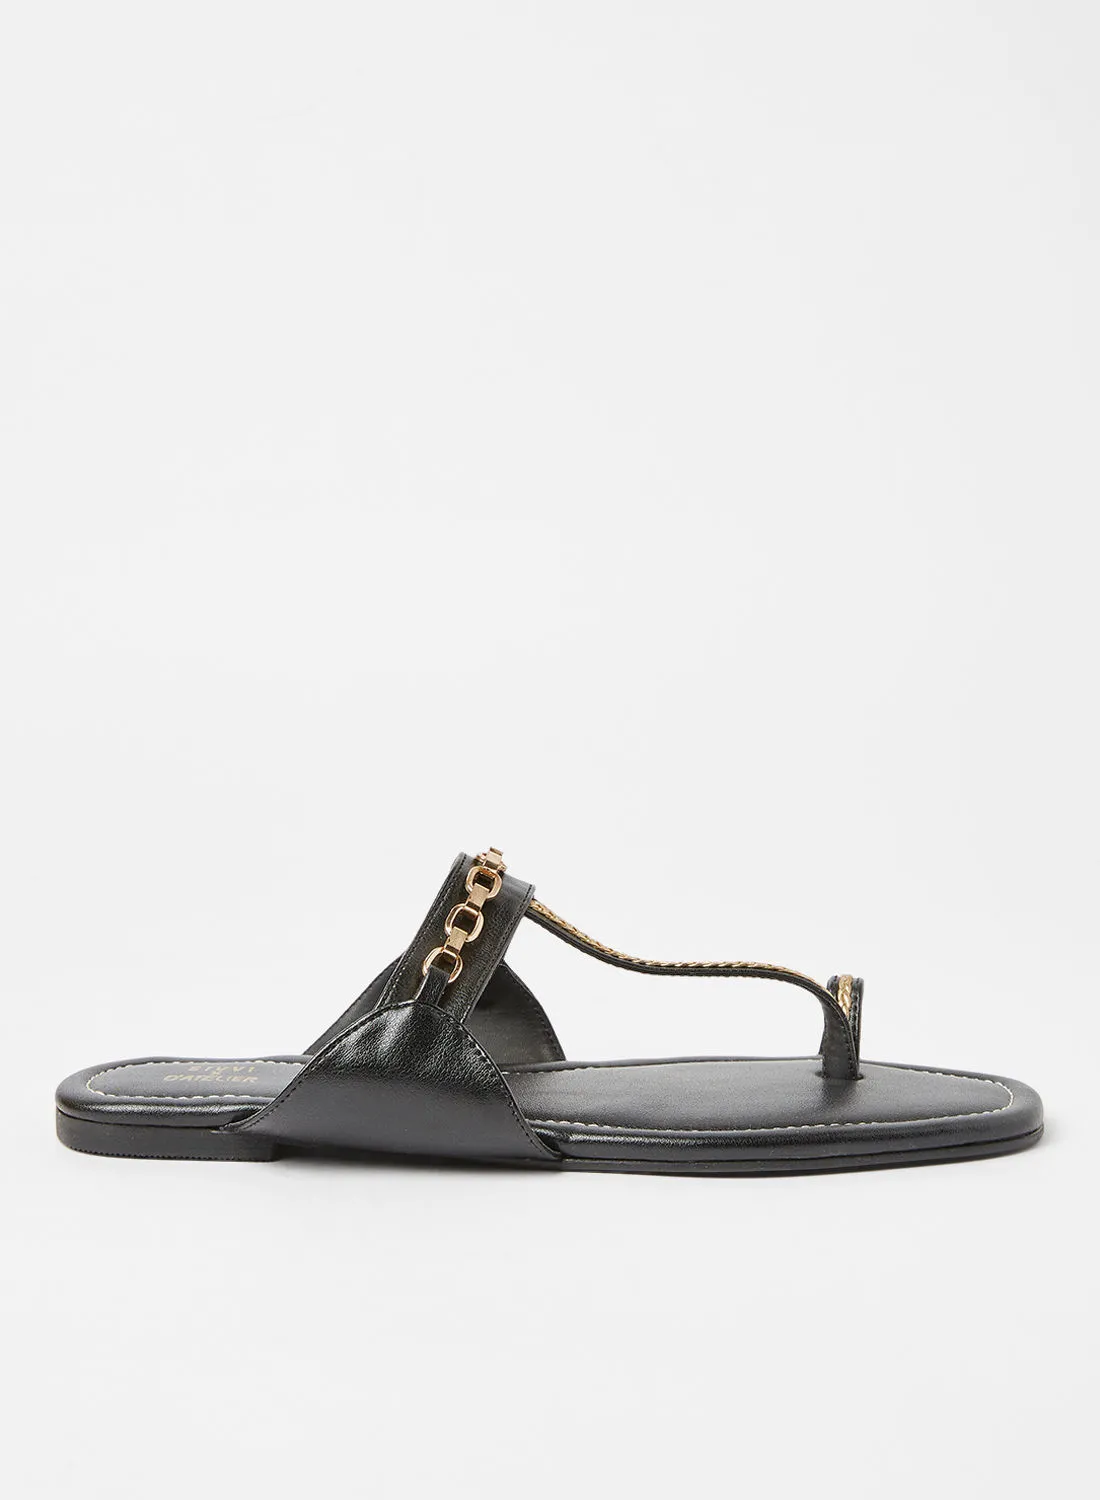 Sivvi x D'Atelier Chain Embellished Flat Sandals Black